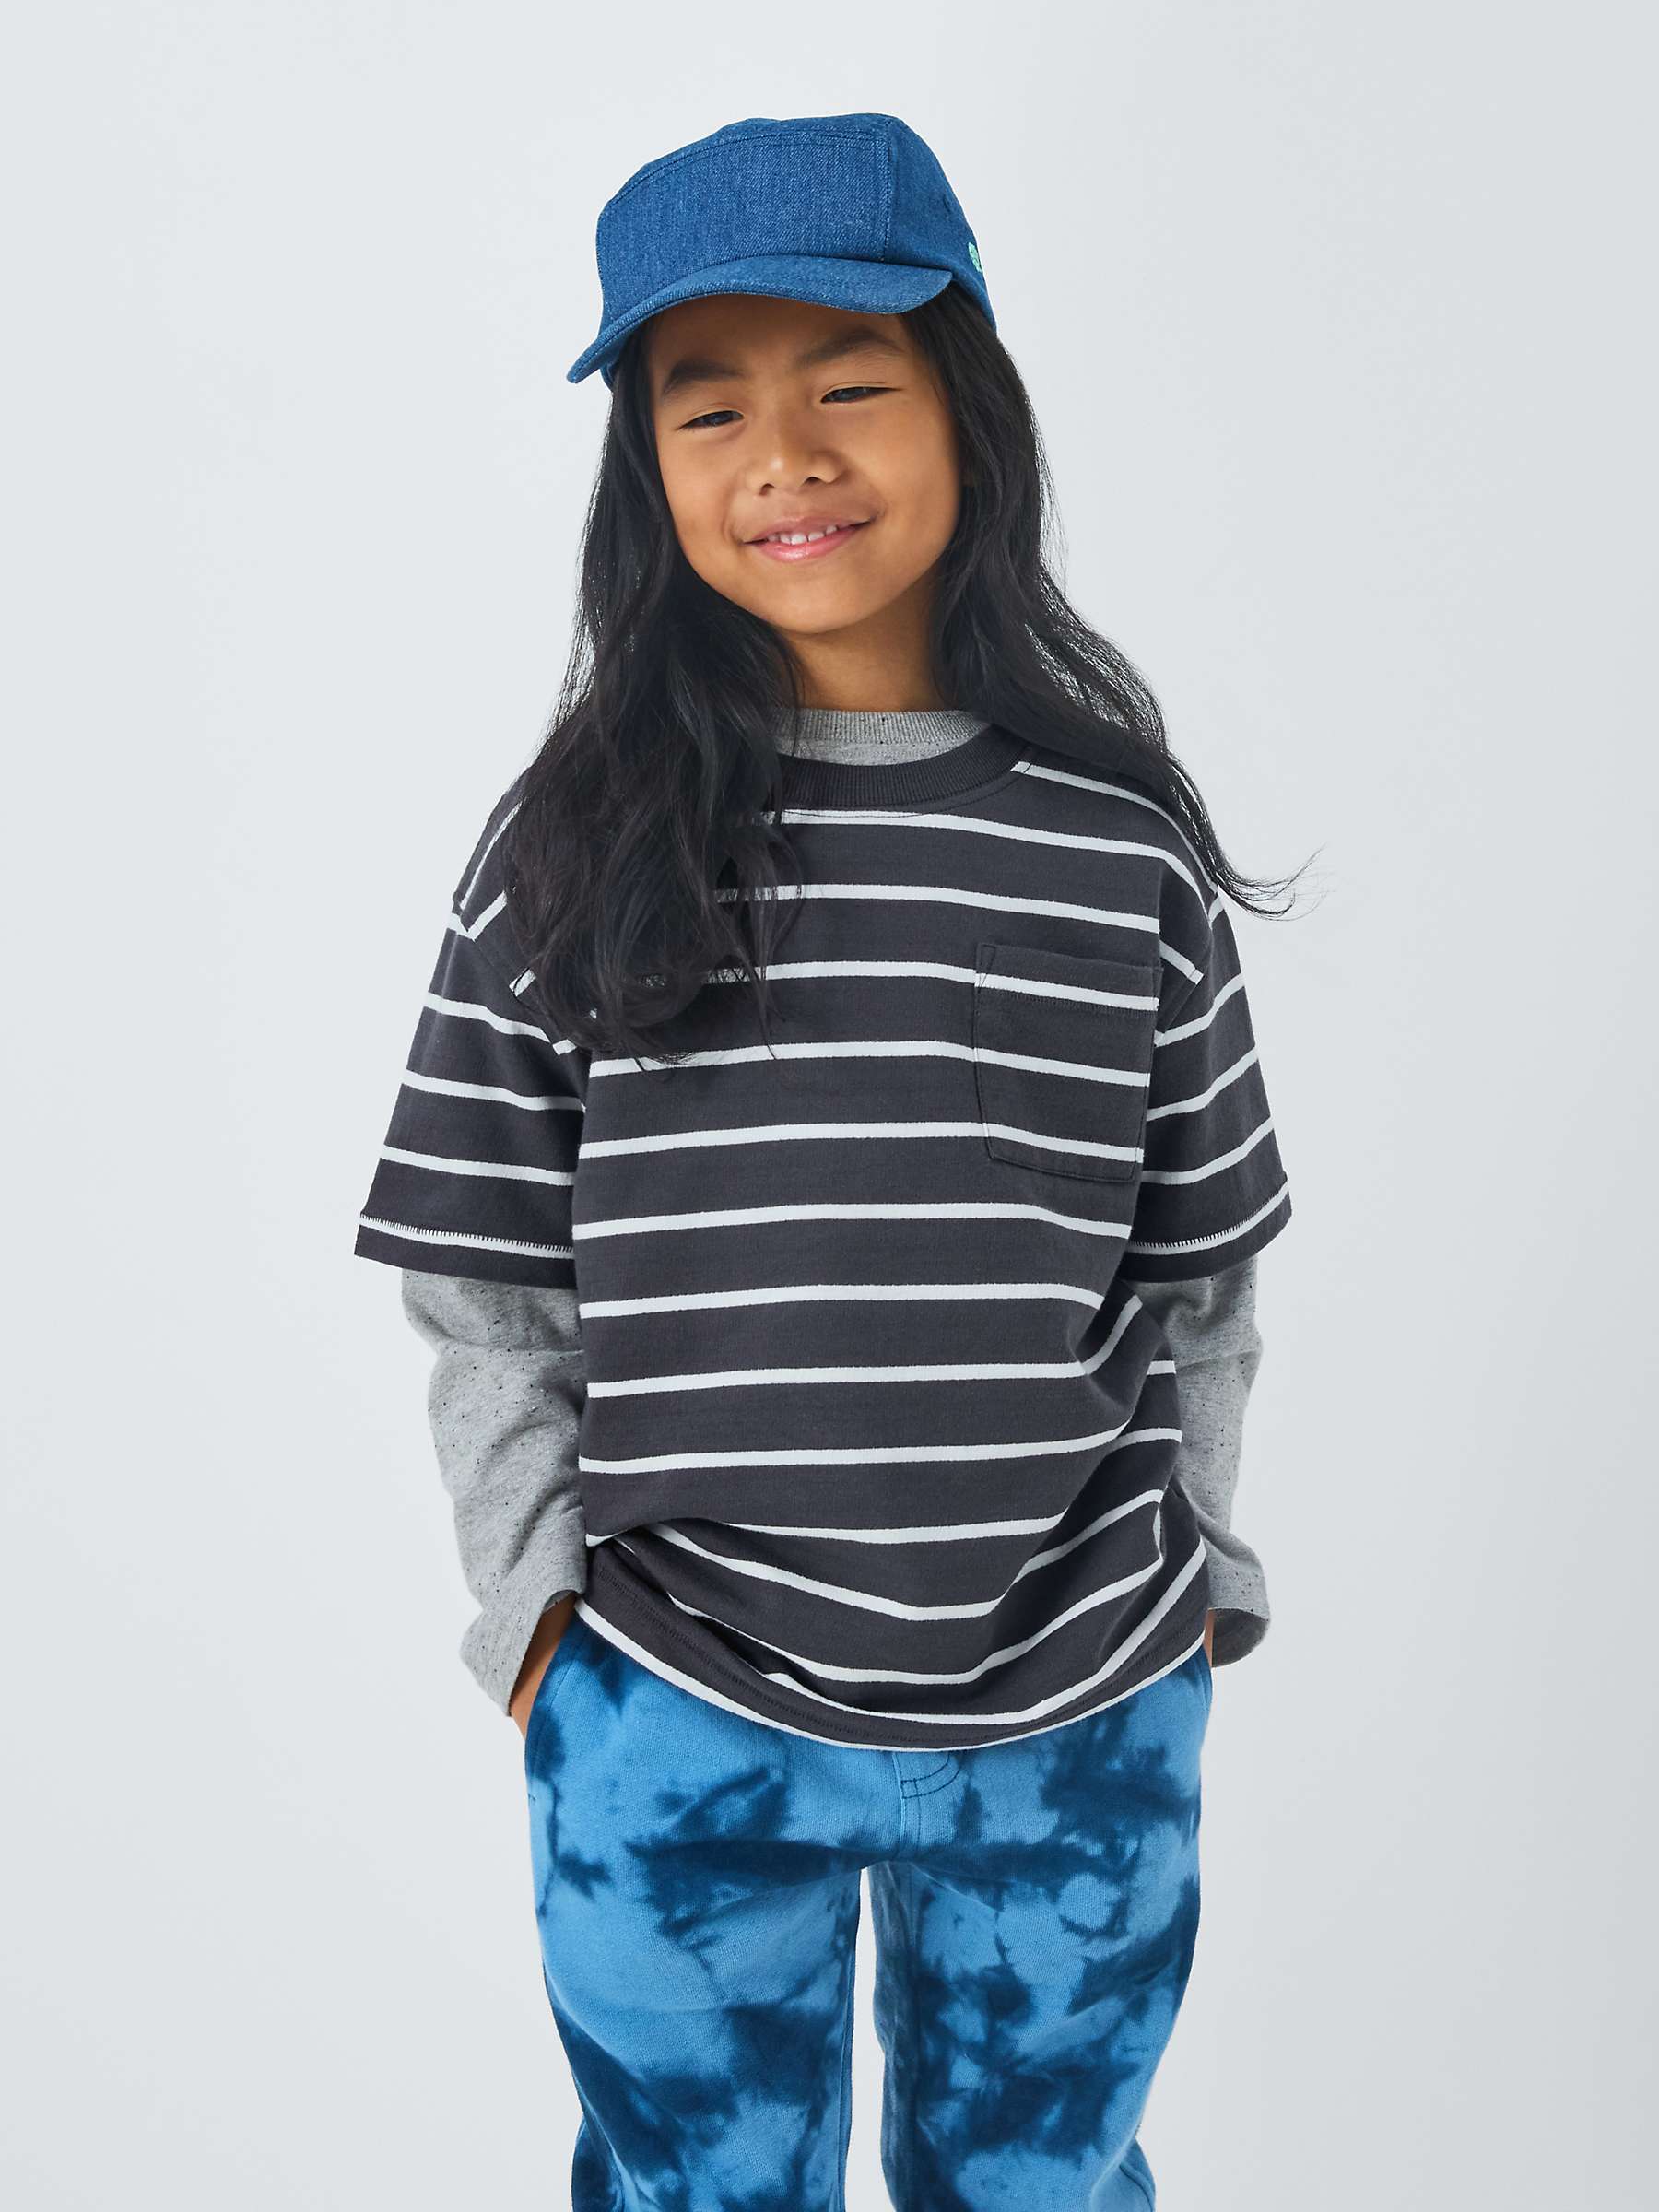 Buy John Lewis Kids' Stripe Short Sleeve T-Shirt, Charcoal Online at johnlewis.com